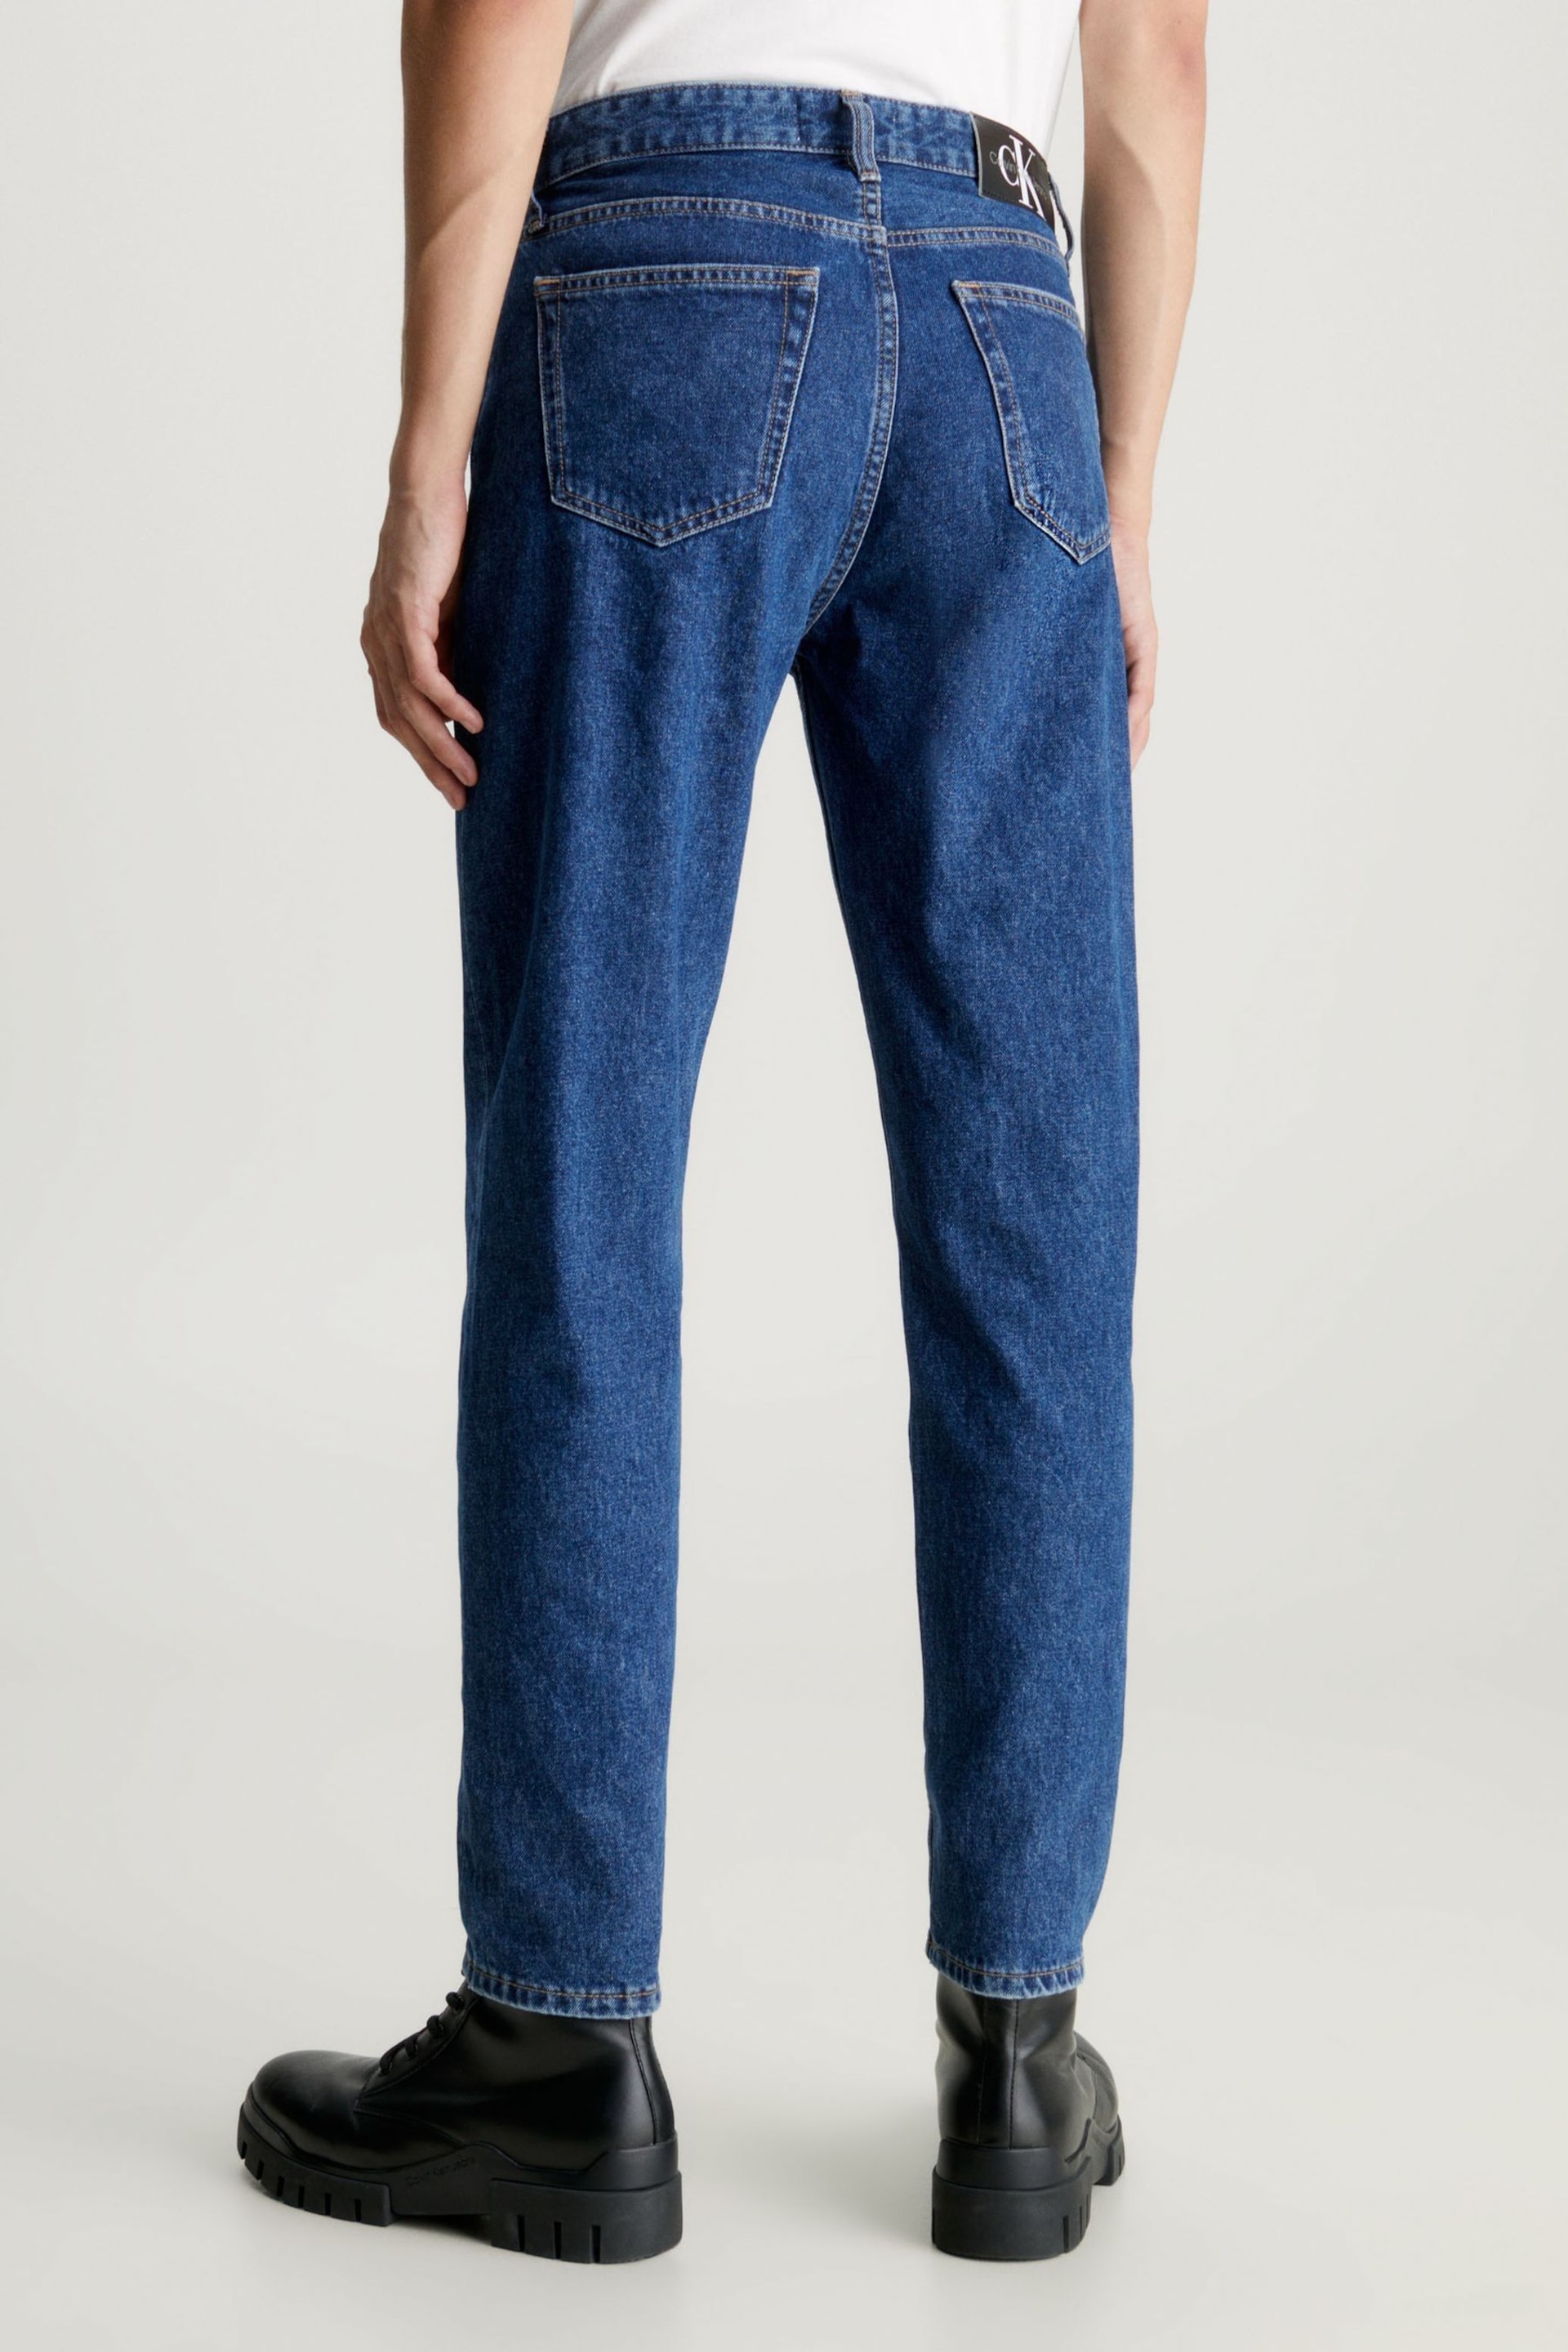 Calvin Klein Jeans Blue Regular Taper Jeans - Image 2 of 6